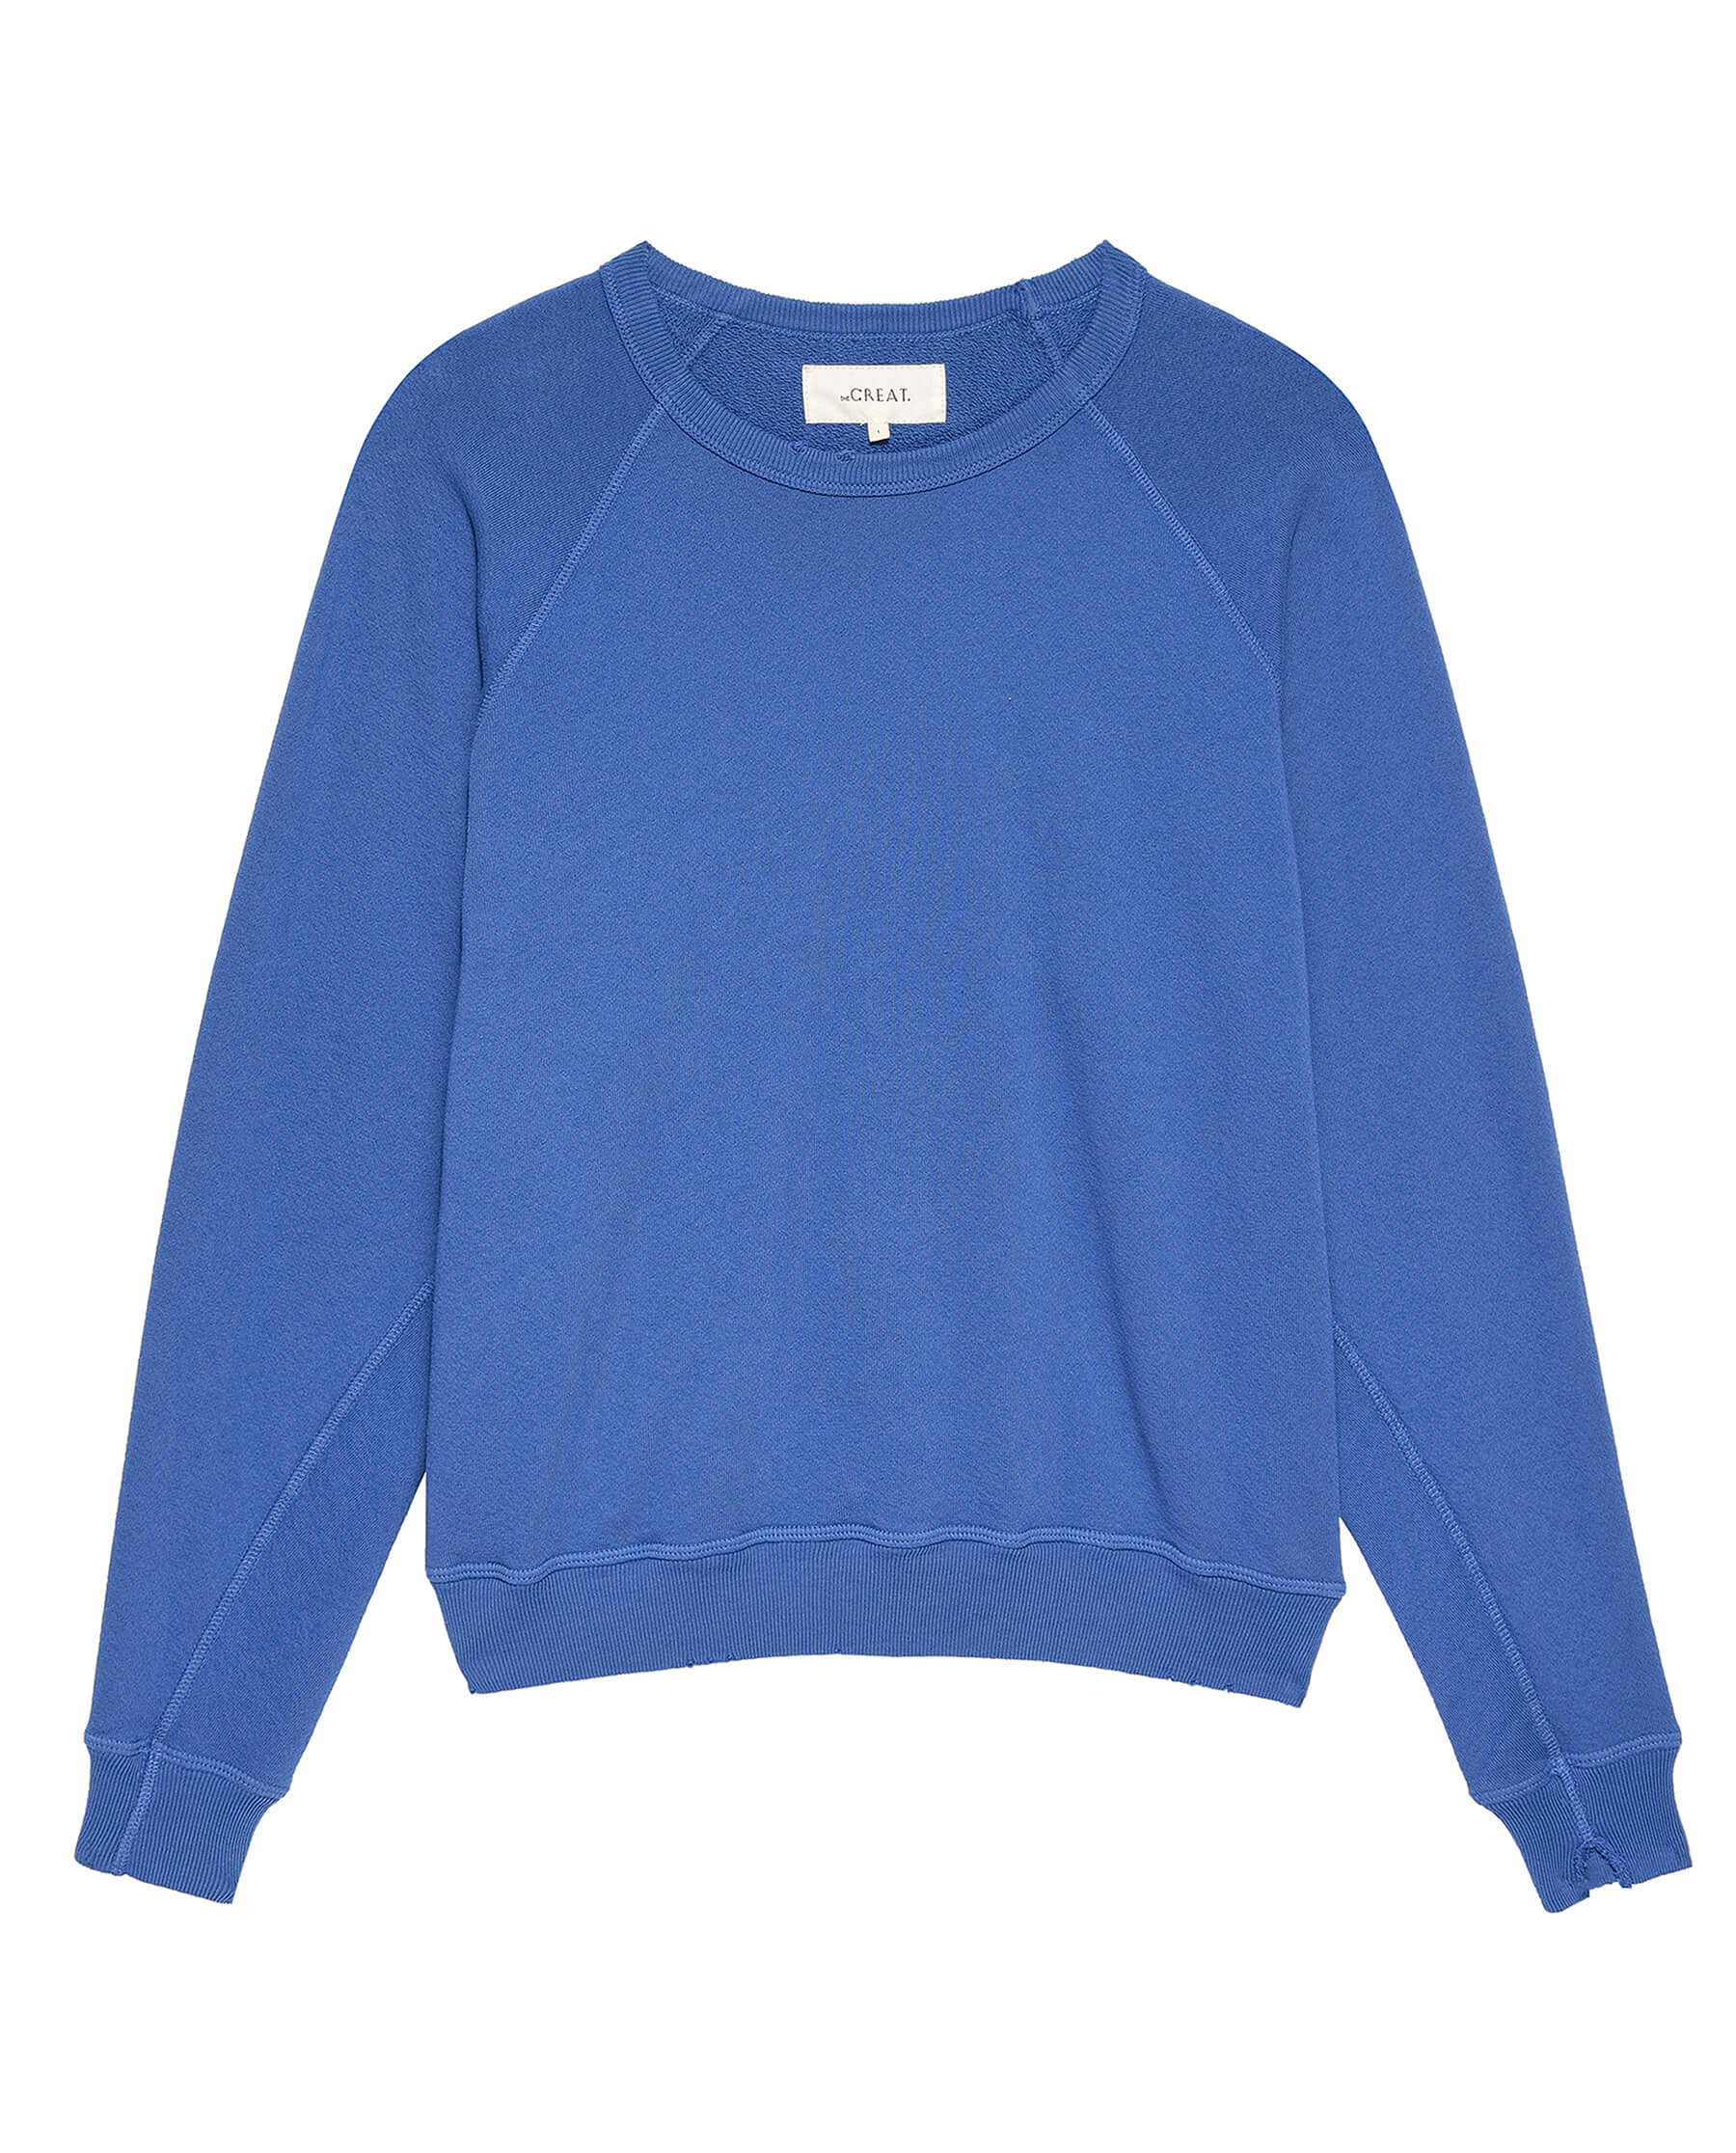 The College Sweatshirt. Solid -- Glacier Blue SWEATSHIRTS THE GREAT. HOL 23 KNITS